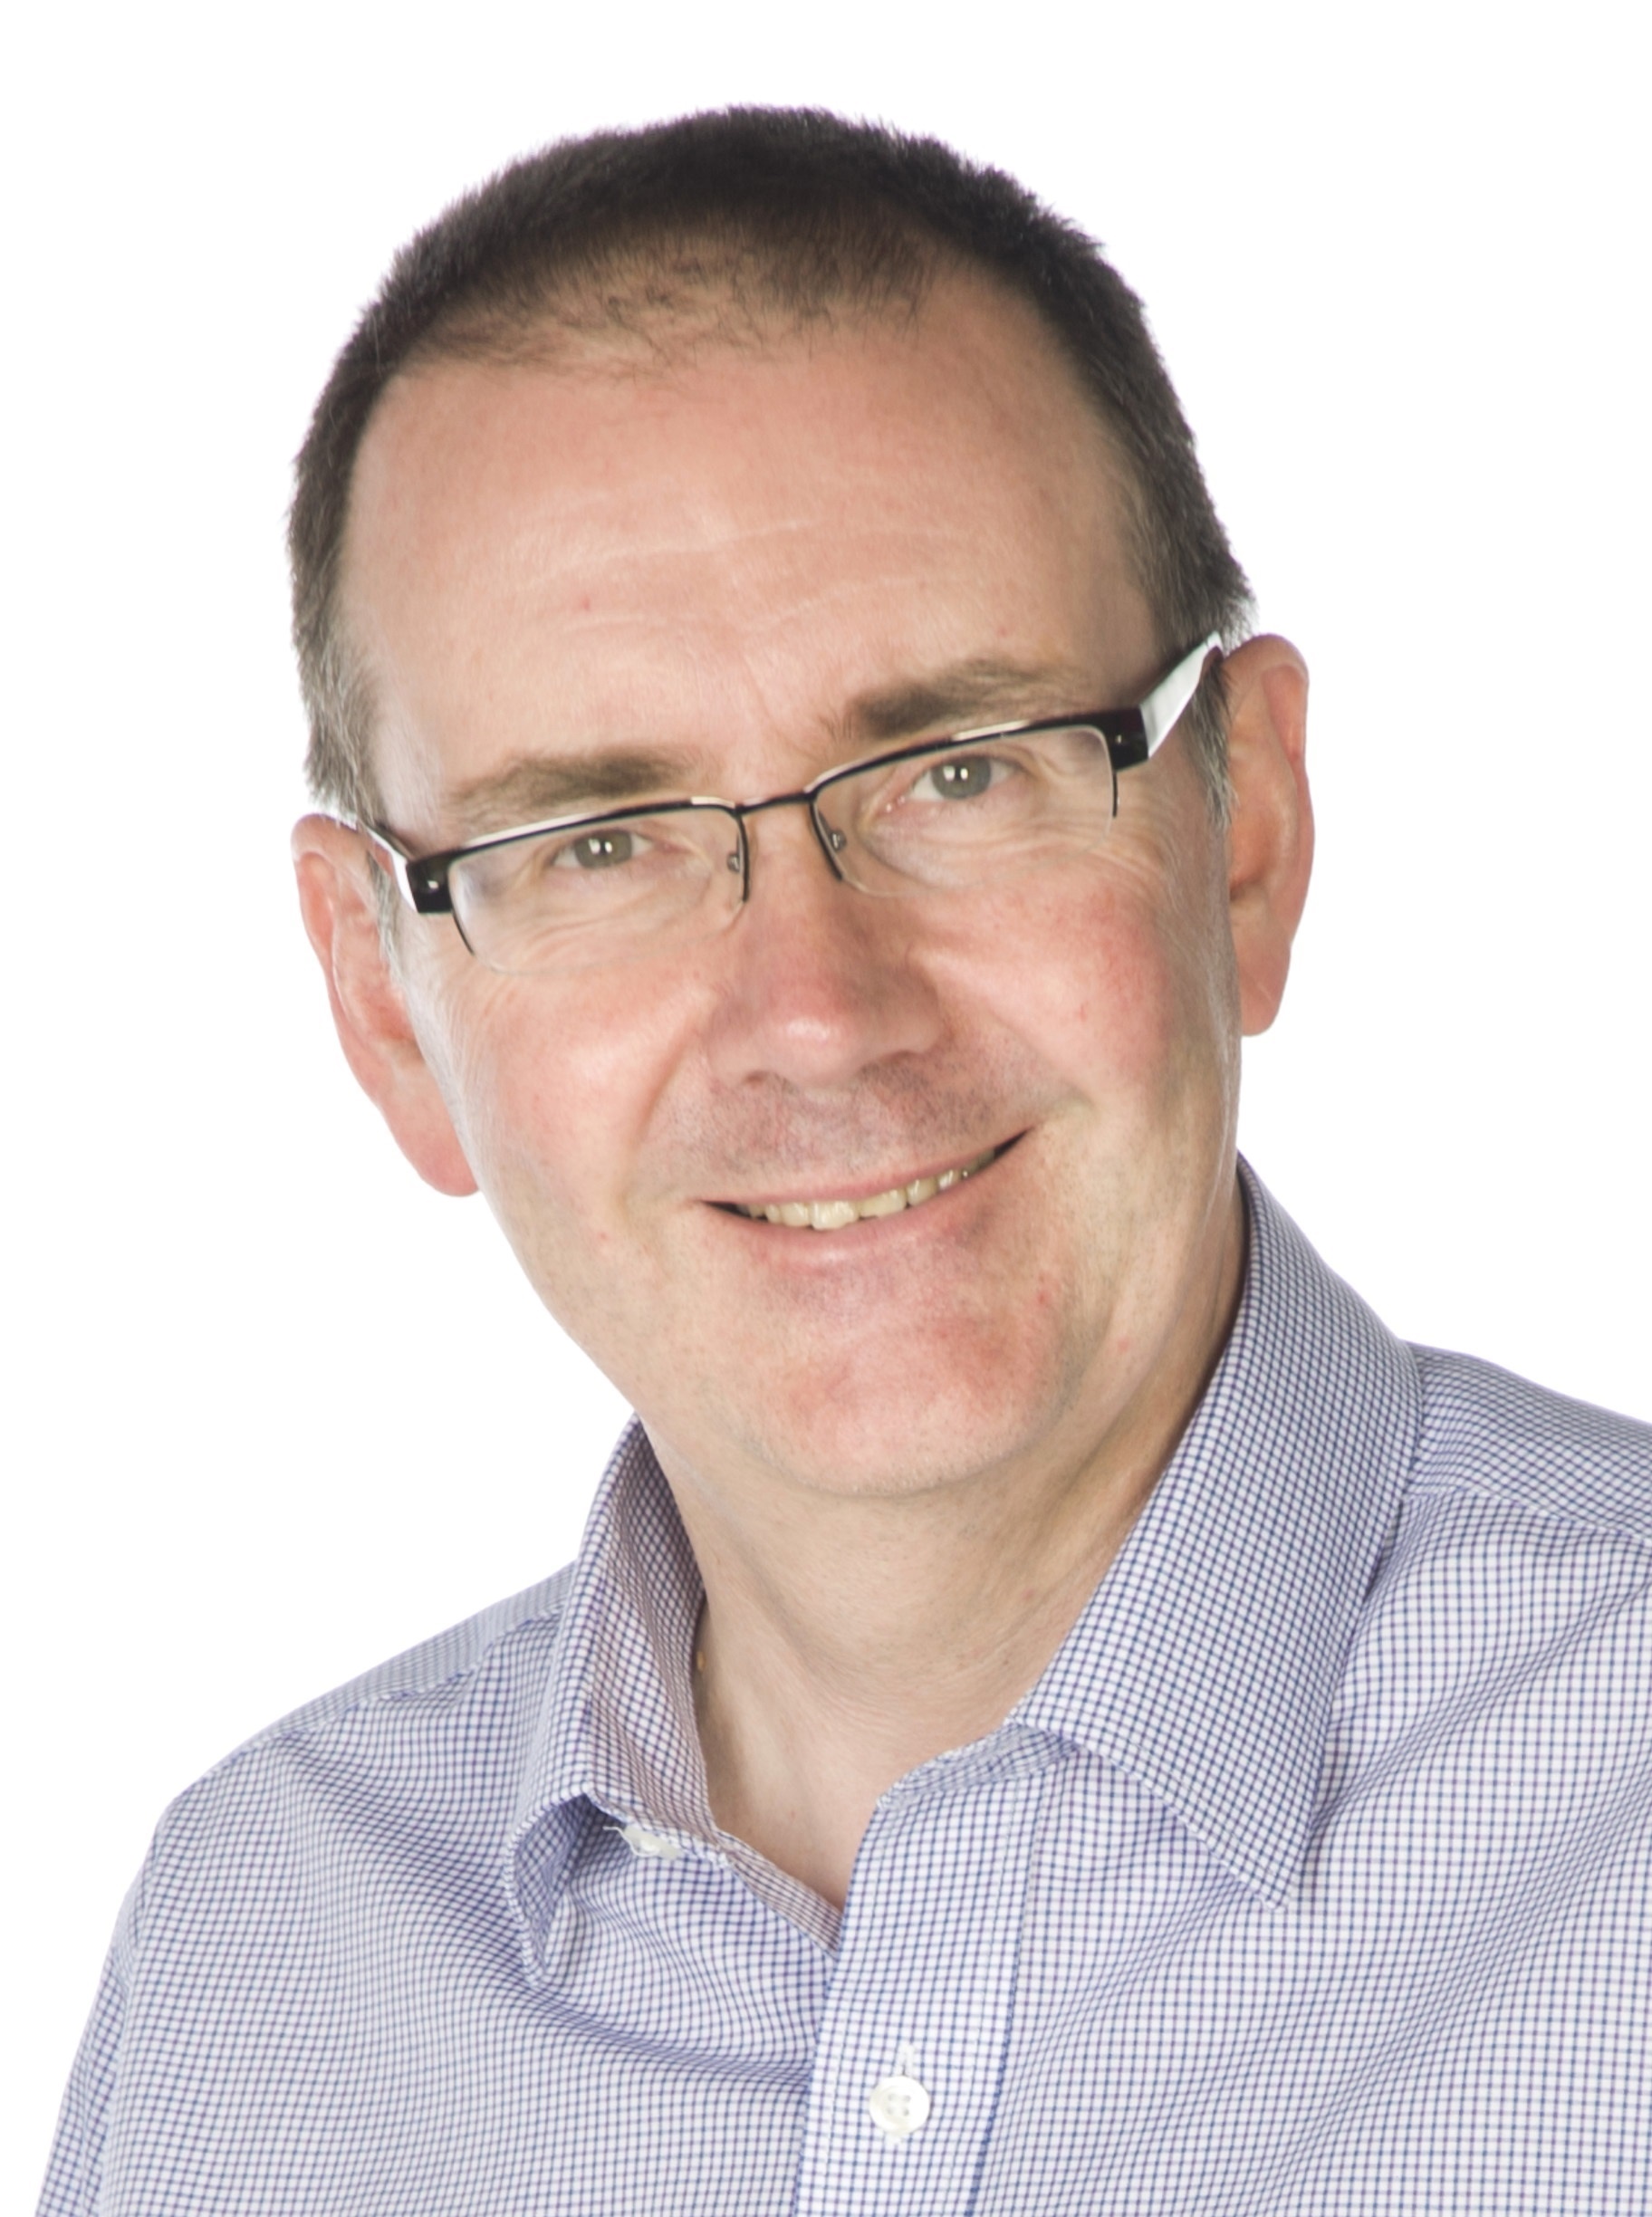 Irvine Housing Association director Paul Hillard to step down